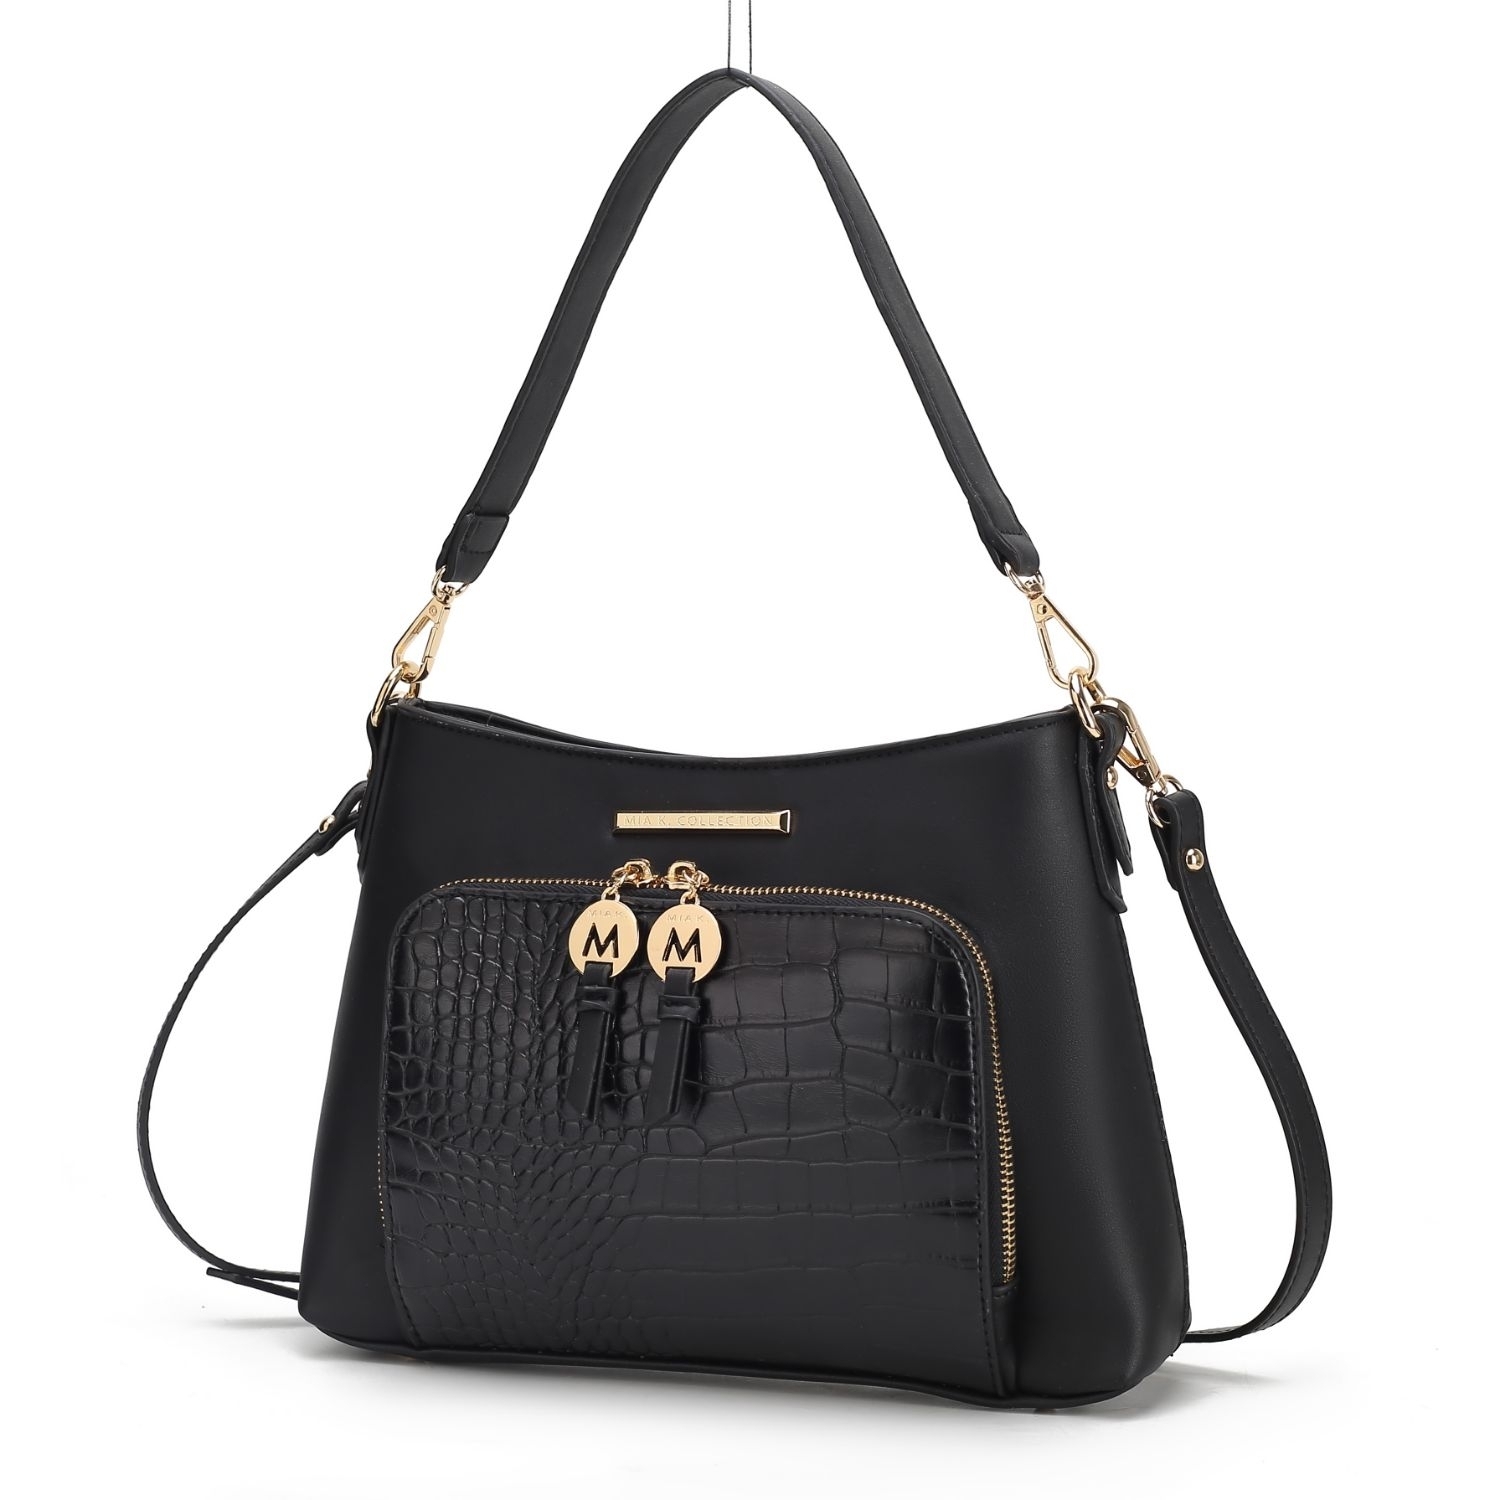 MKF Collection Anayra Shoulder Handbag By Mia K - Wine